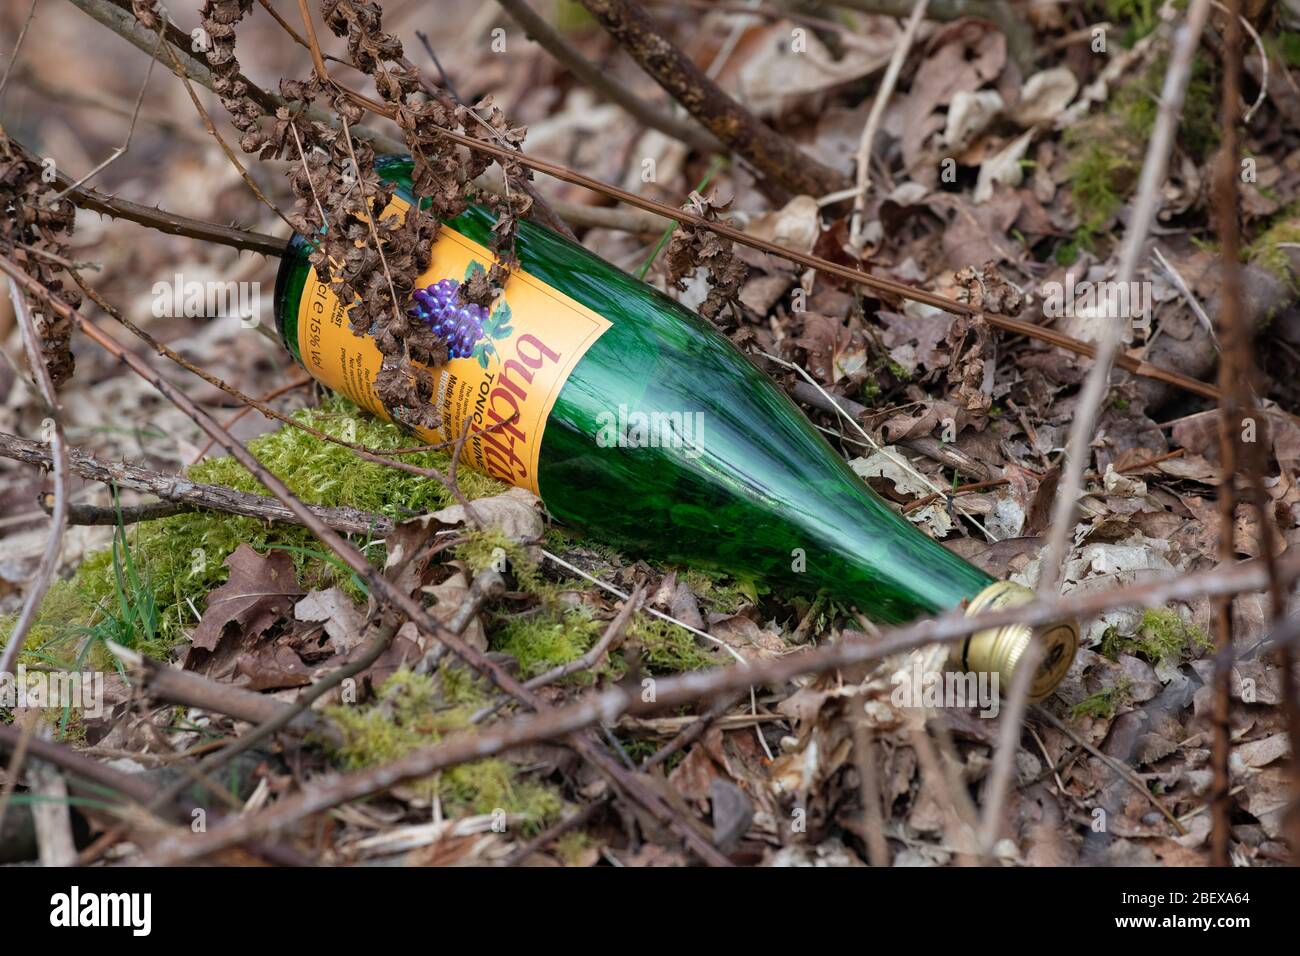 buckfast tonic wine - empty bottle thrown in rural hedge bottom - Scotland, UK Stock Photo